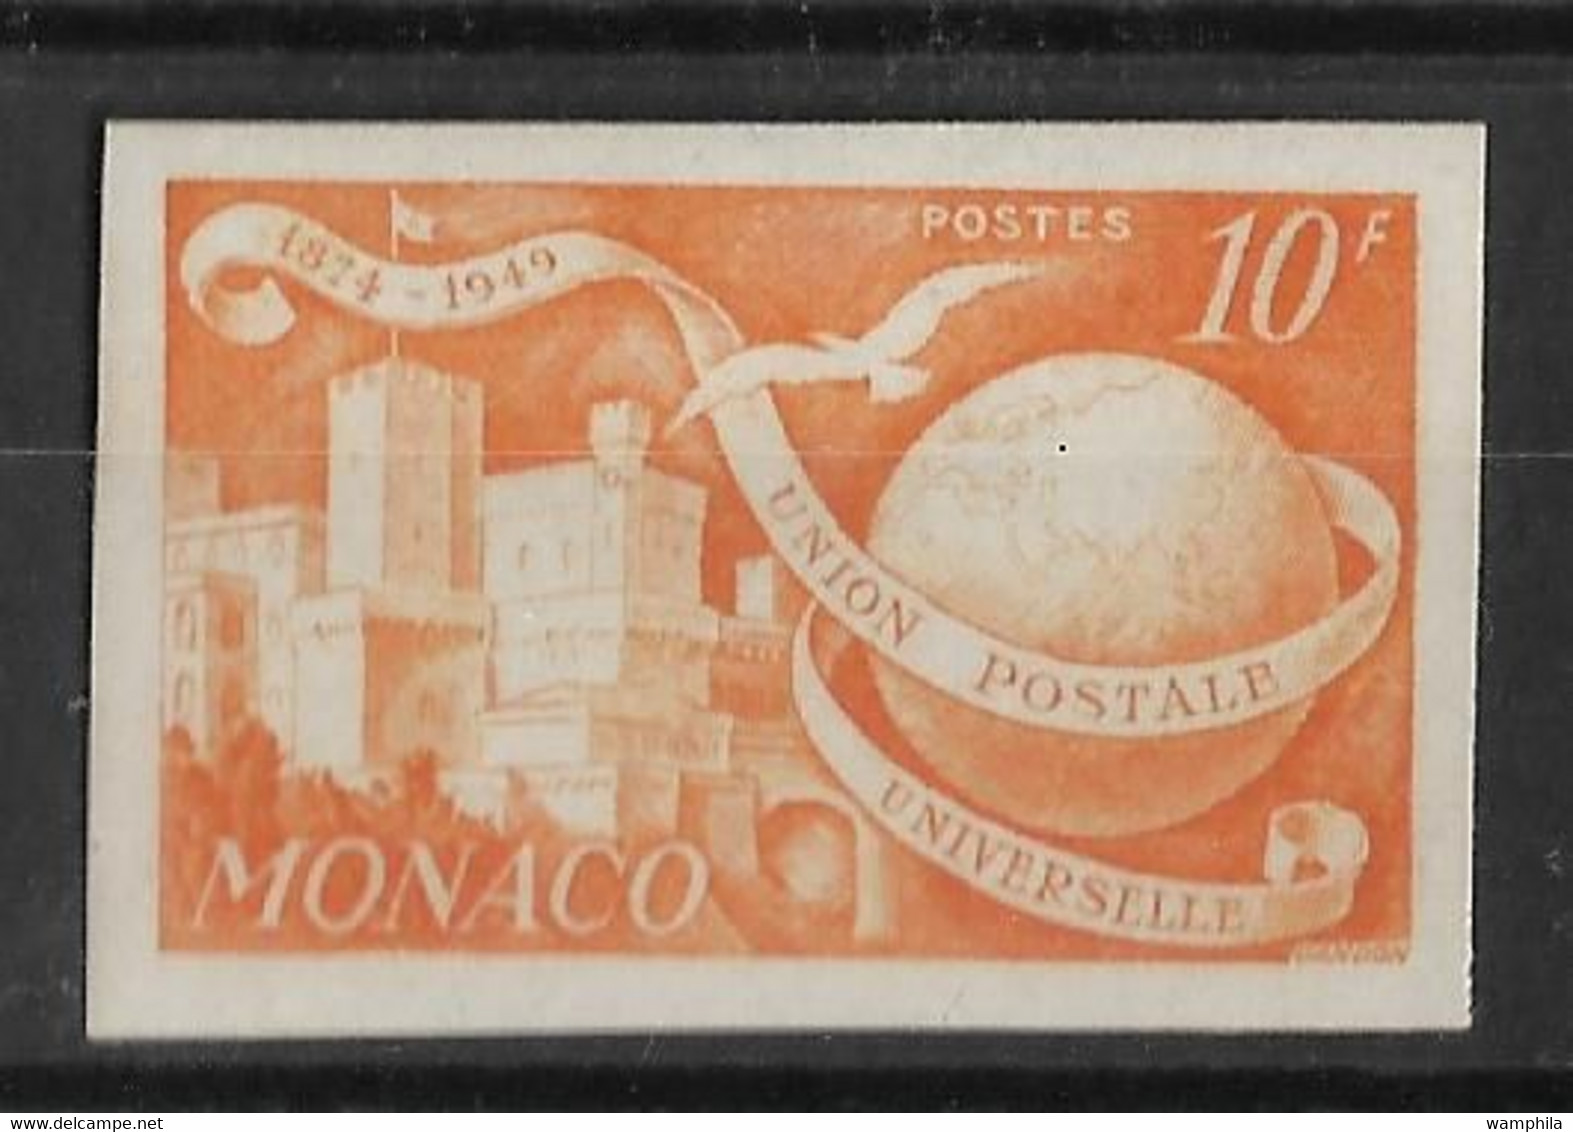 Monaco N°332A* Non Dentelés. Anniversaire De L'U.P.U. - Errors And Oddities